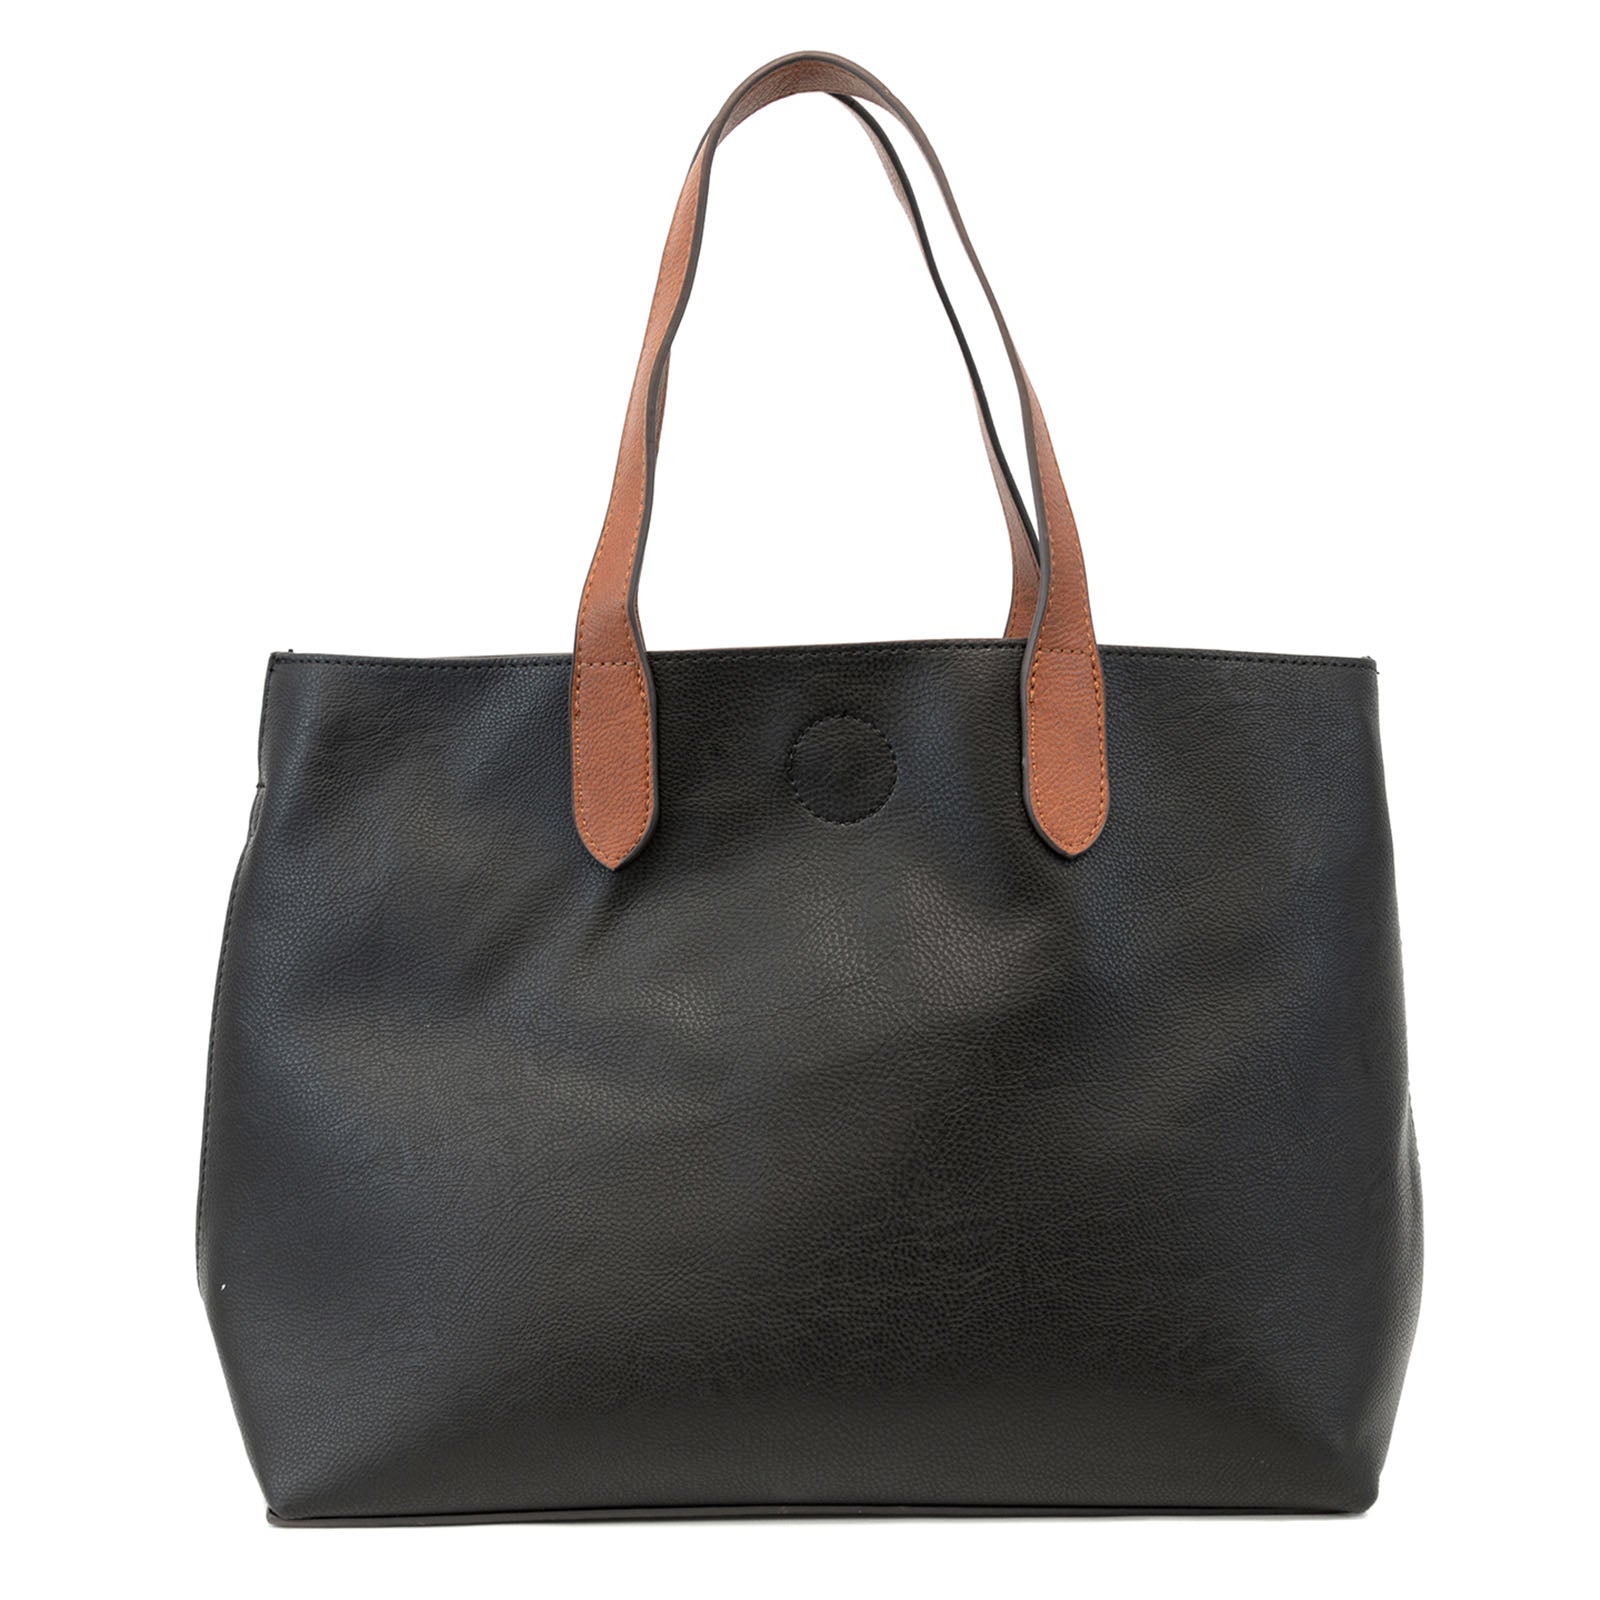 Joy Accessories Mariah handbag black